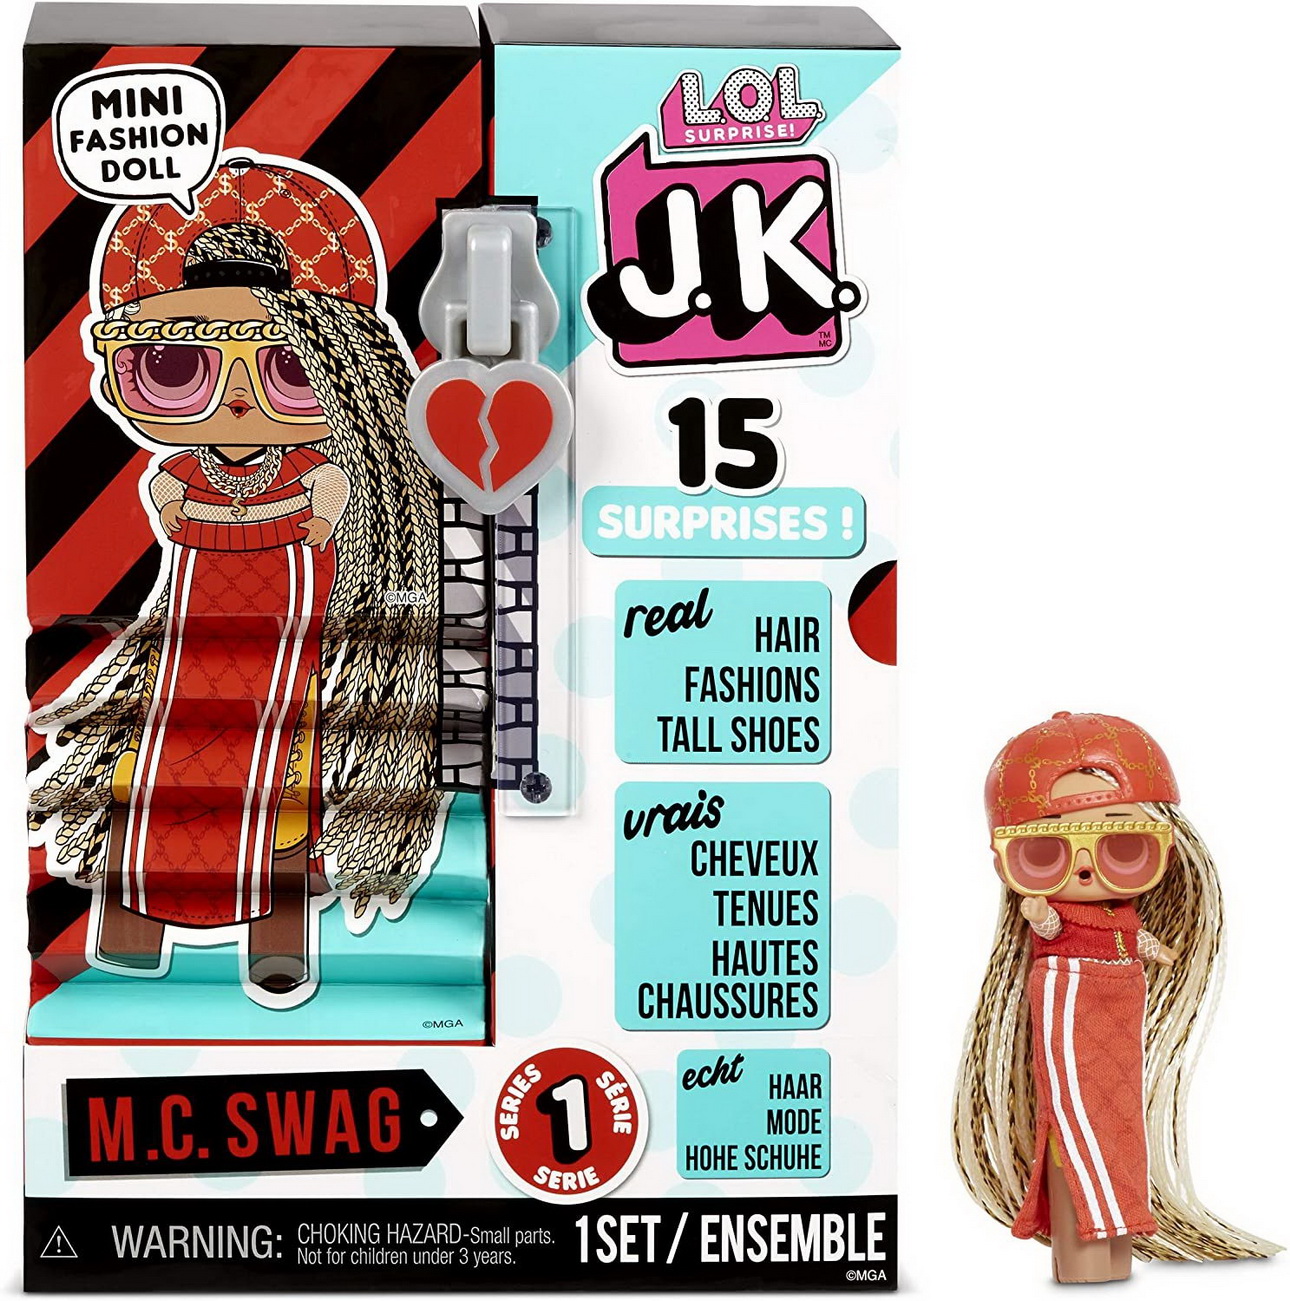 L.O.L. Surprise - J.K. Mini Fashion Doll - M.C. Swag Puppe